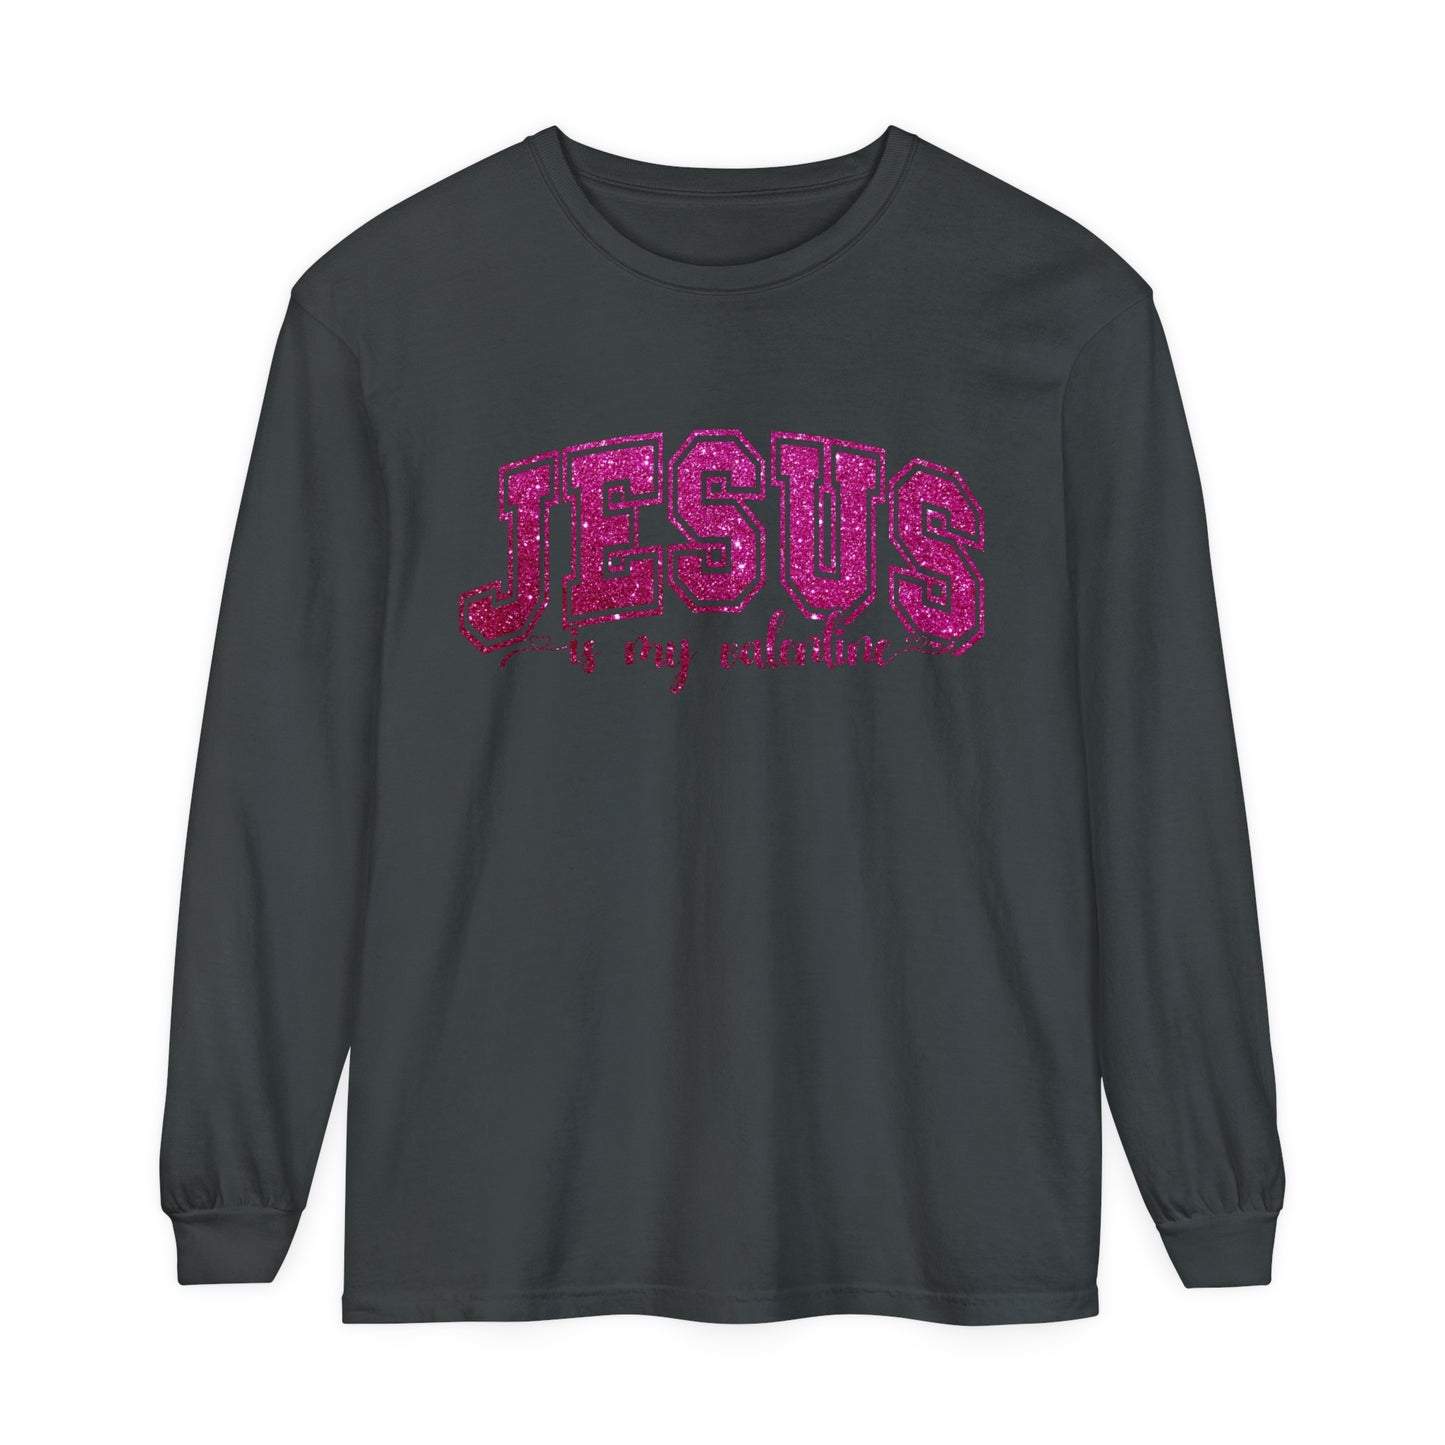 Jesus is My Valentine Women's Loose Long Sleeve T-Shirt